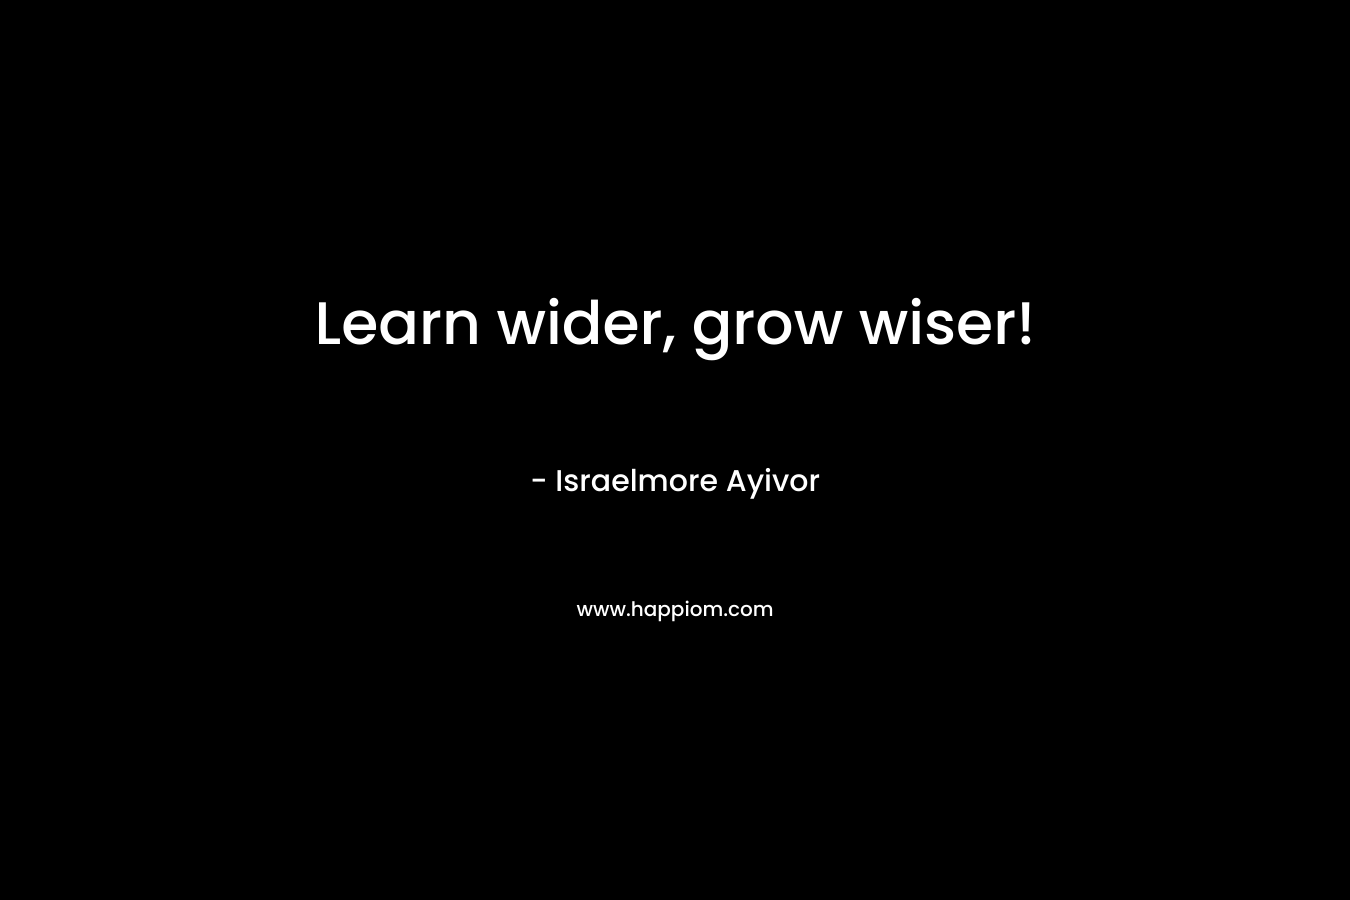 Learn wider, grow wiser!